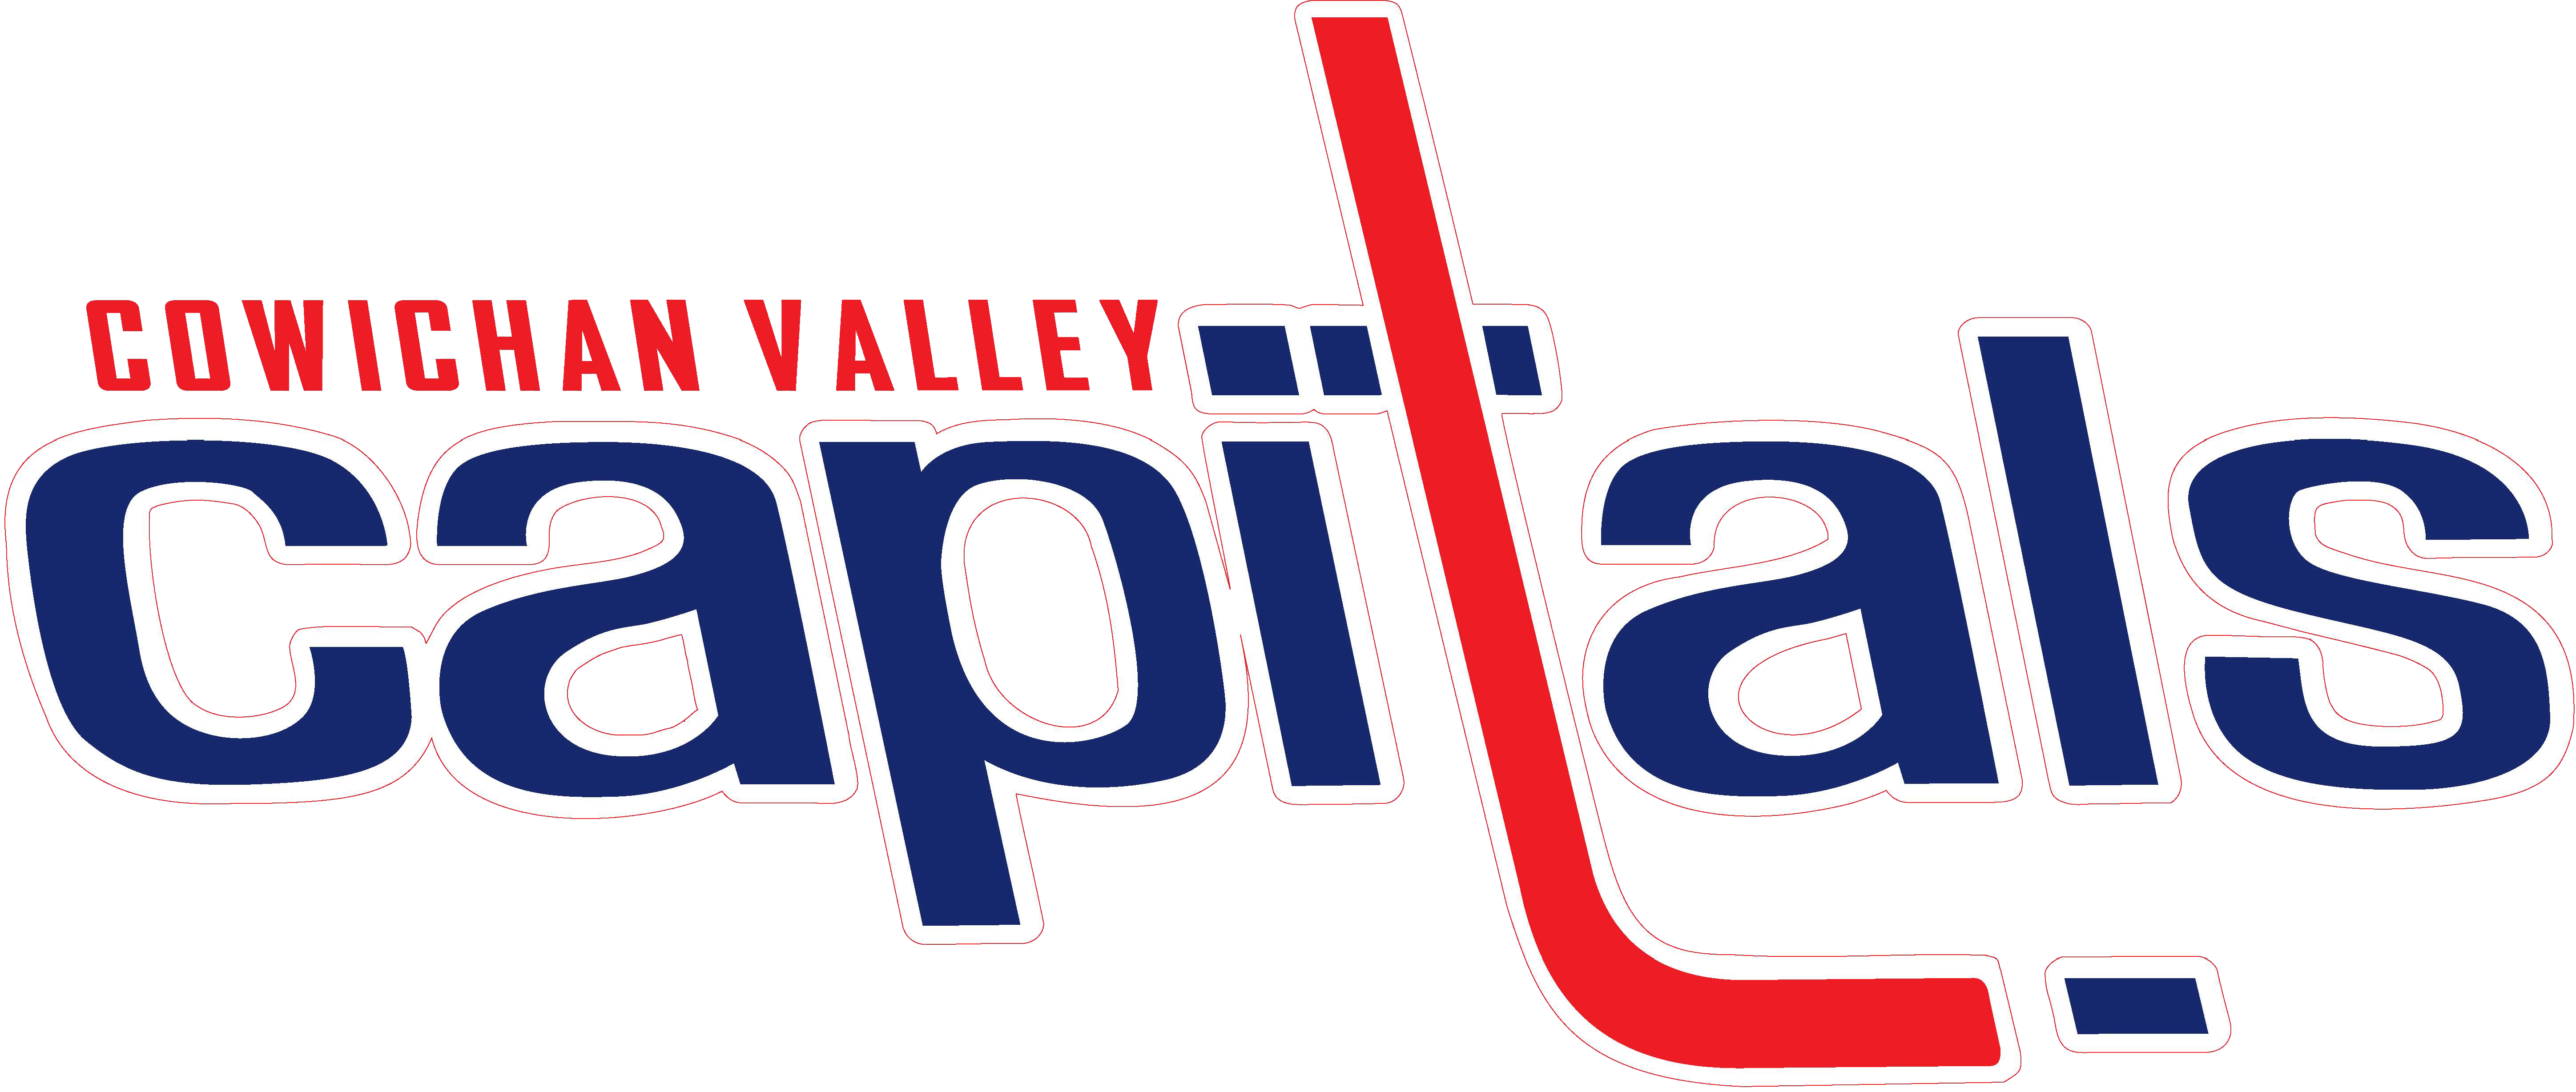 Cowichan Valley Minor Hockey Association 